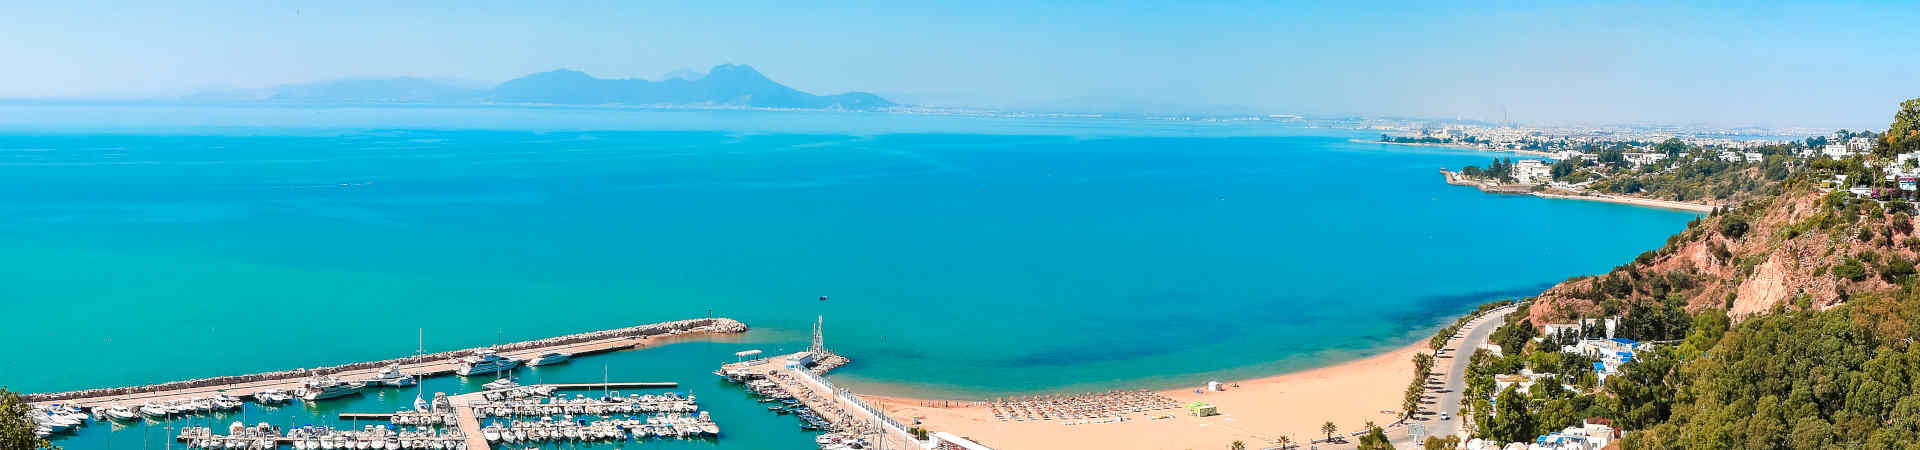 Imagen recurso del puerto de destino Tunez para la ruta en ferry Civitavecchia - Tunez